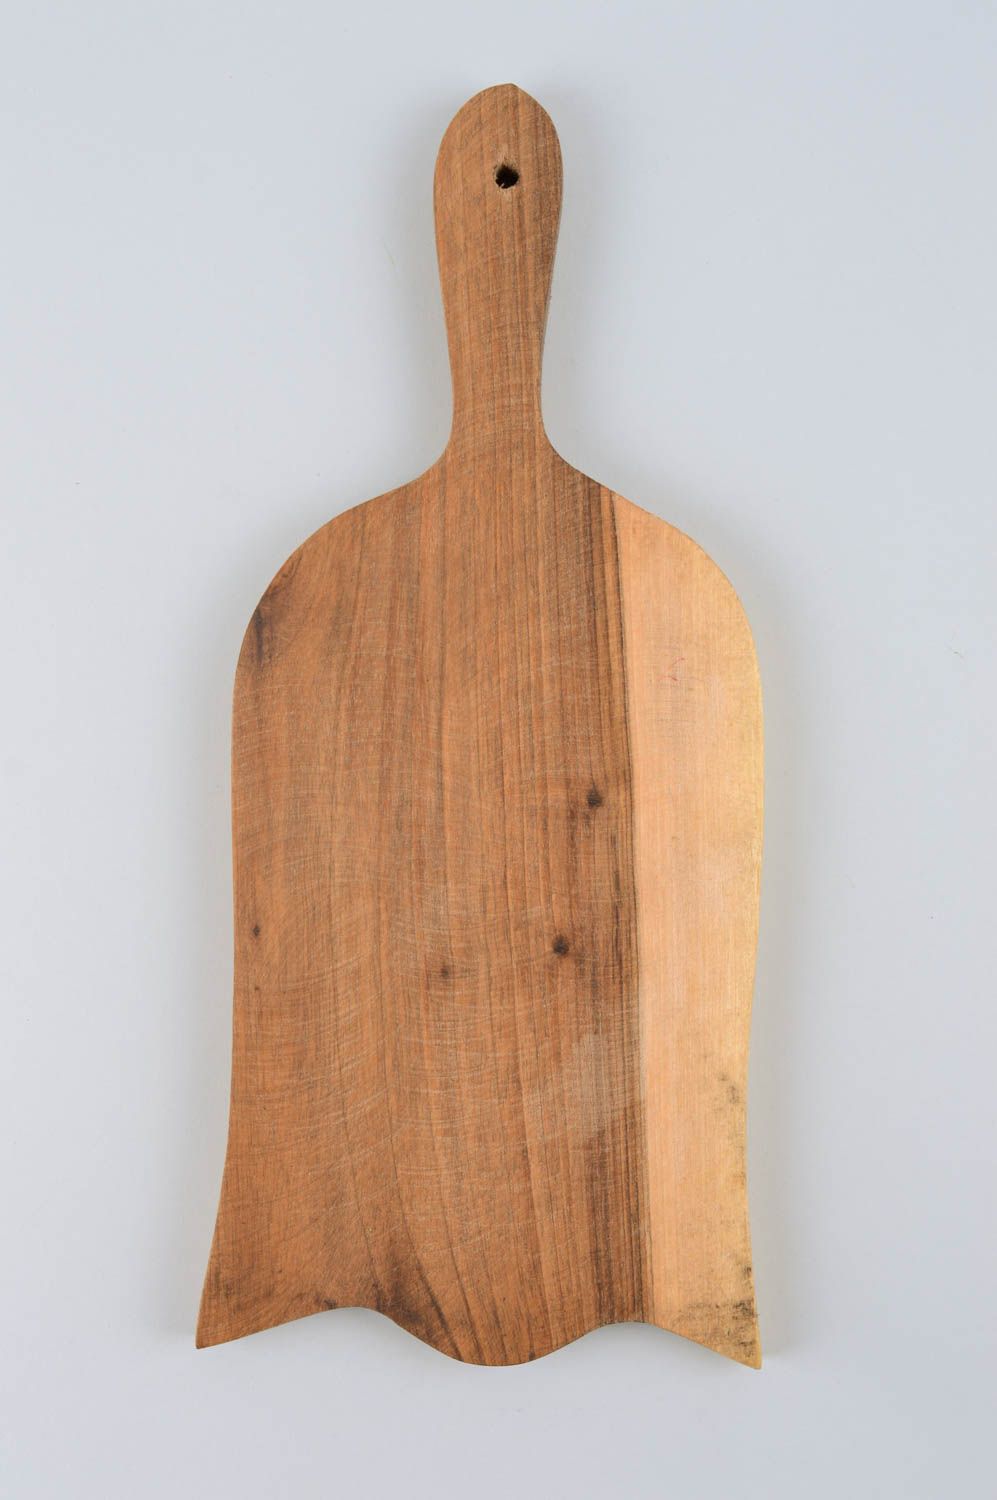 Handmade wooden cutting board chopping board kitchen decor wooden utensils photo 2